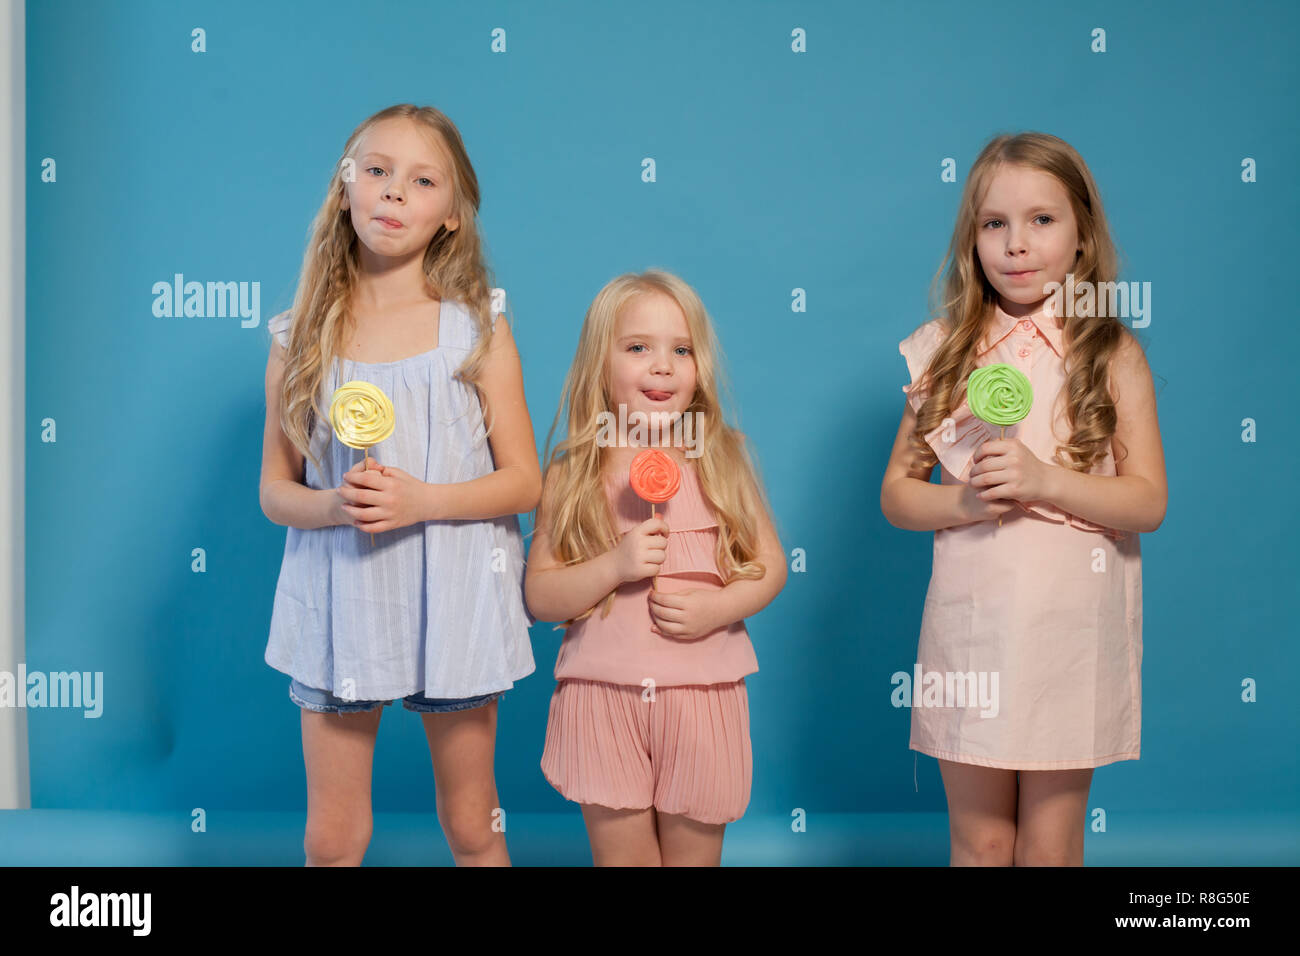 three girls girlfriend eat candy lollipop sister Stock Photo